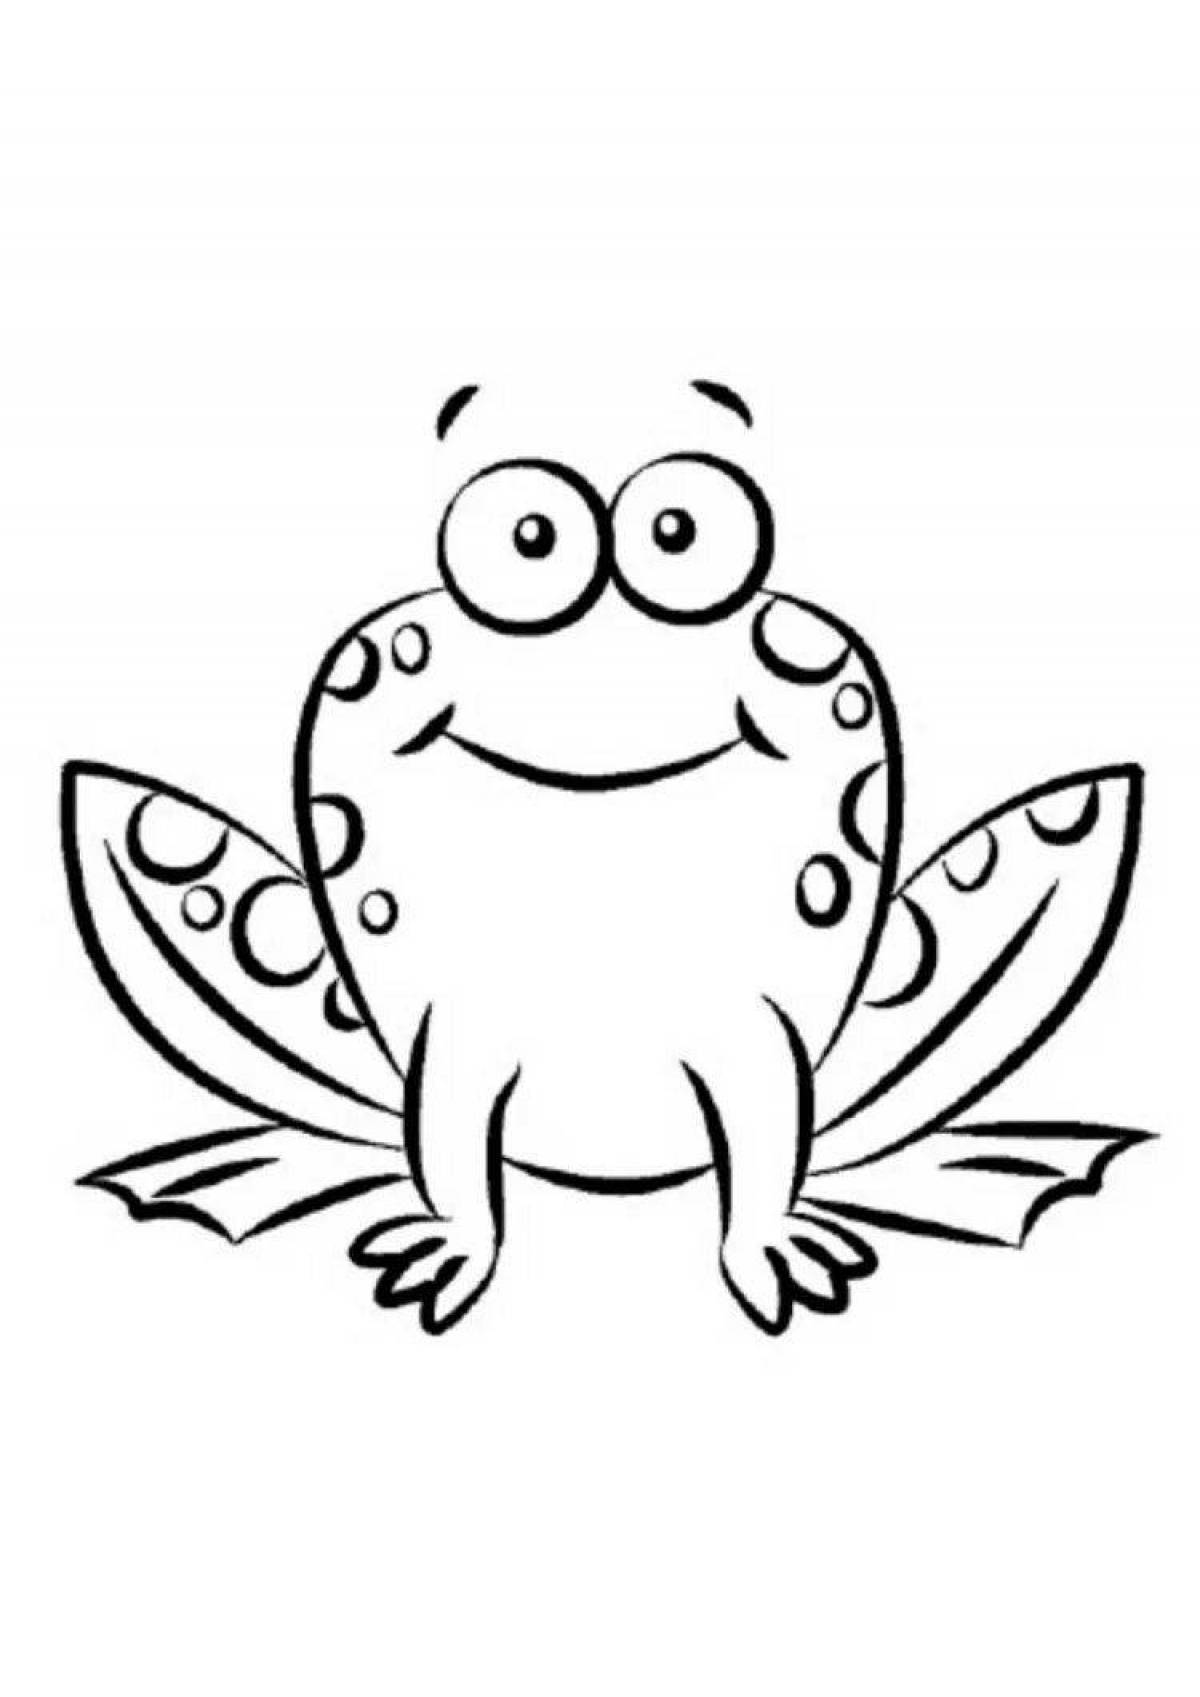 Frog funny cartoon coloring book